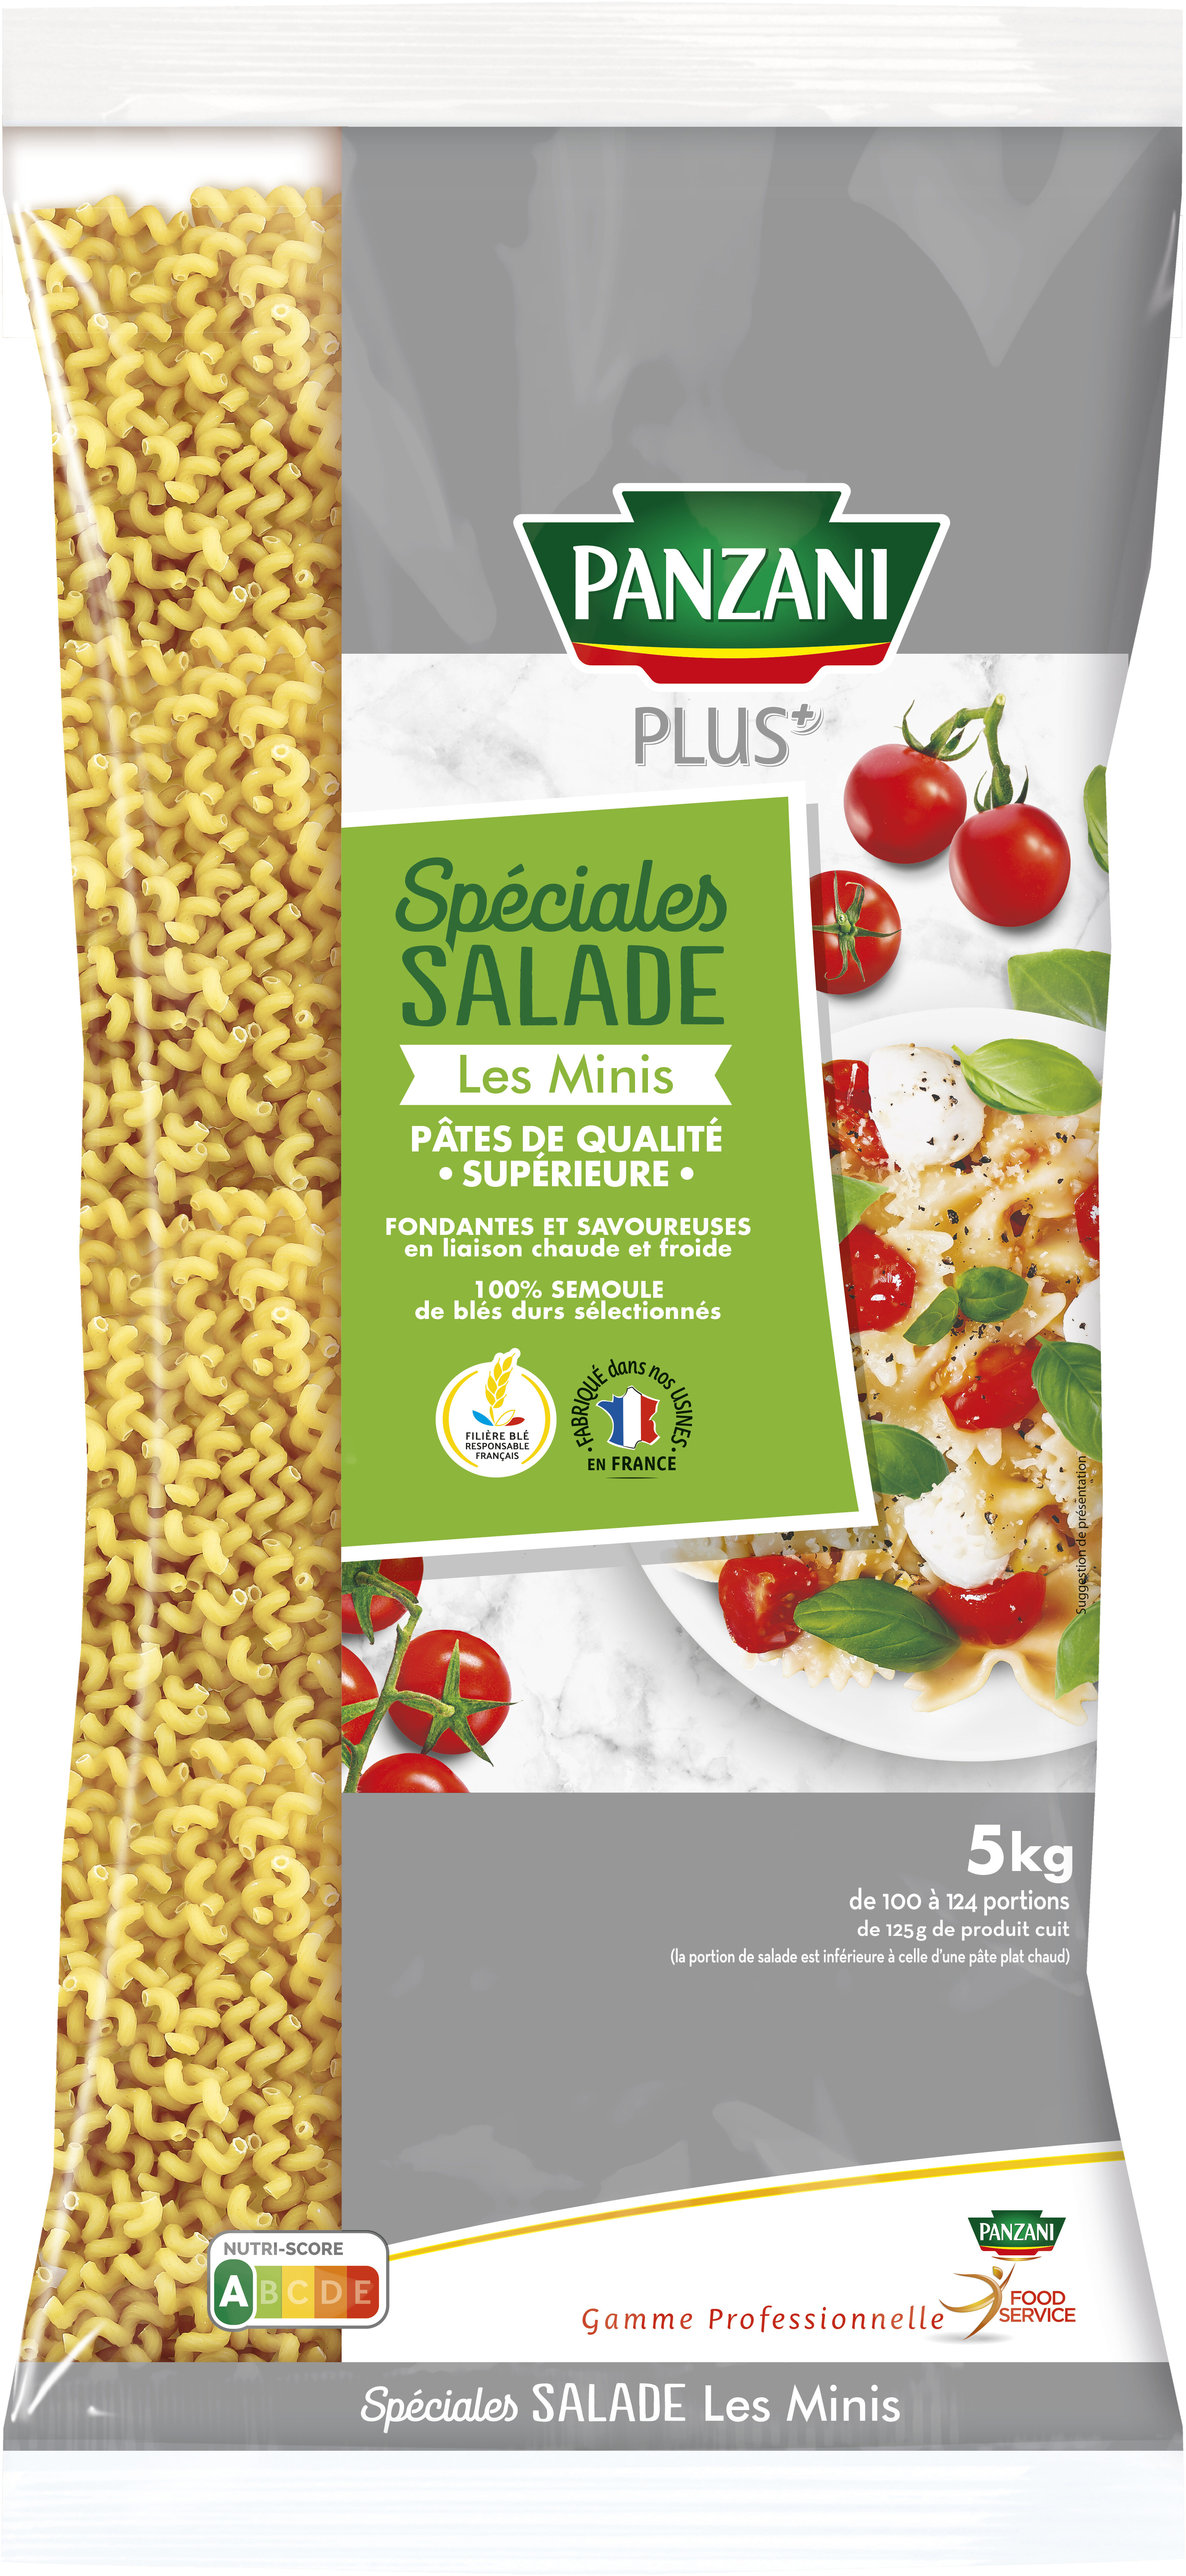 Panzani+ pates mini serpentini salade 5kg - Product - fr